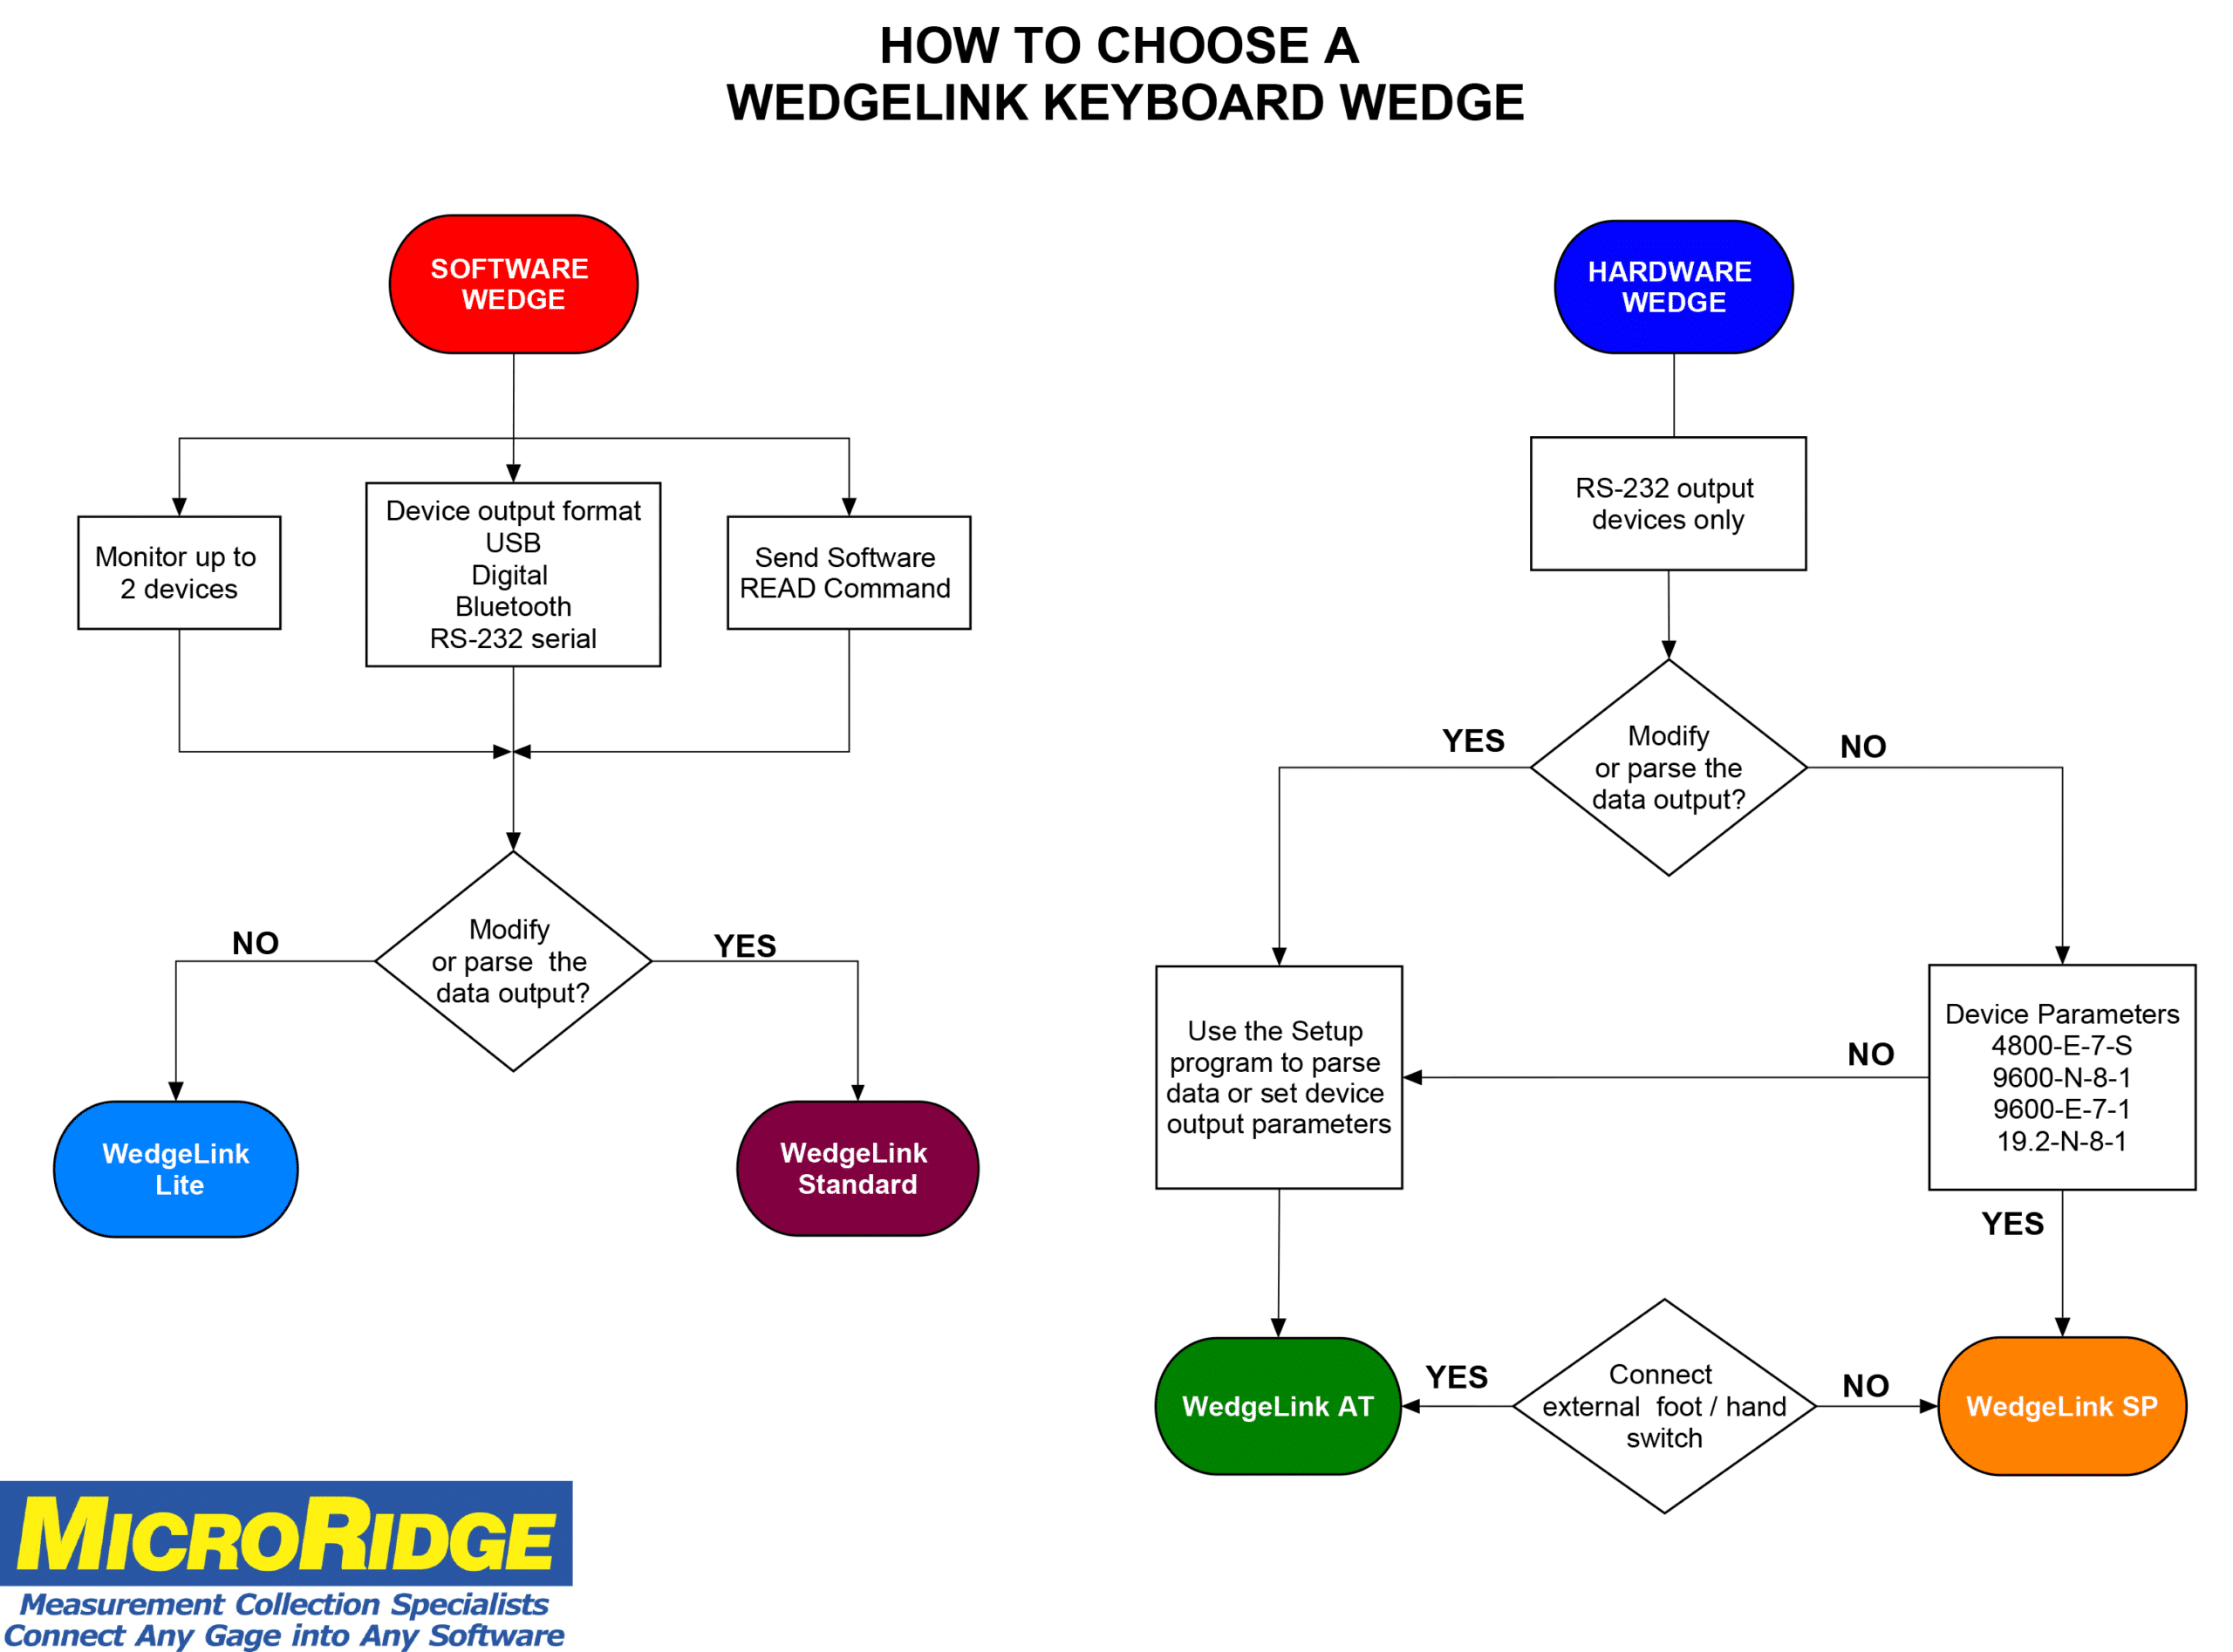 How to Choose a WedgeLink Keyboard Wedge